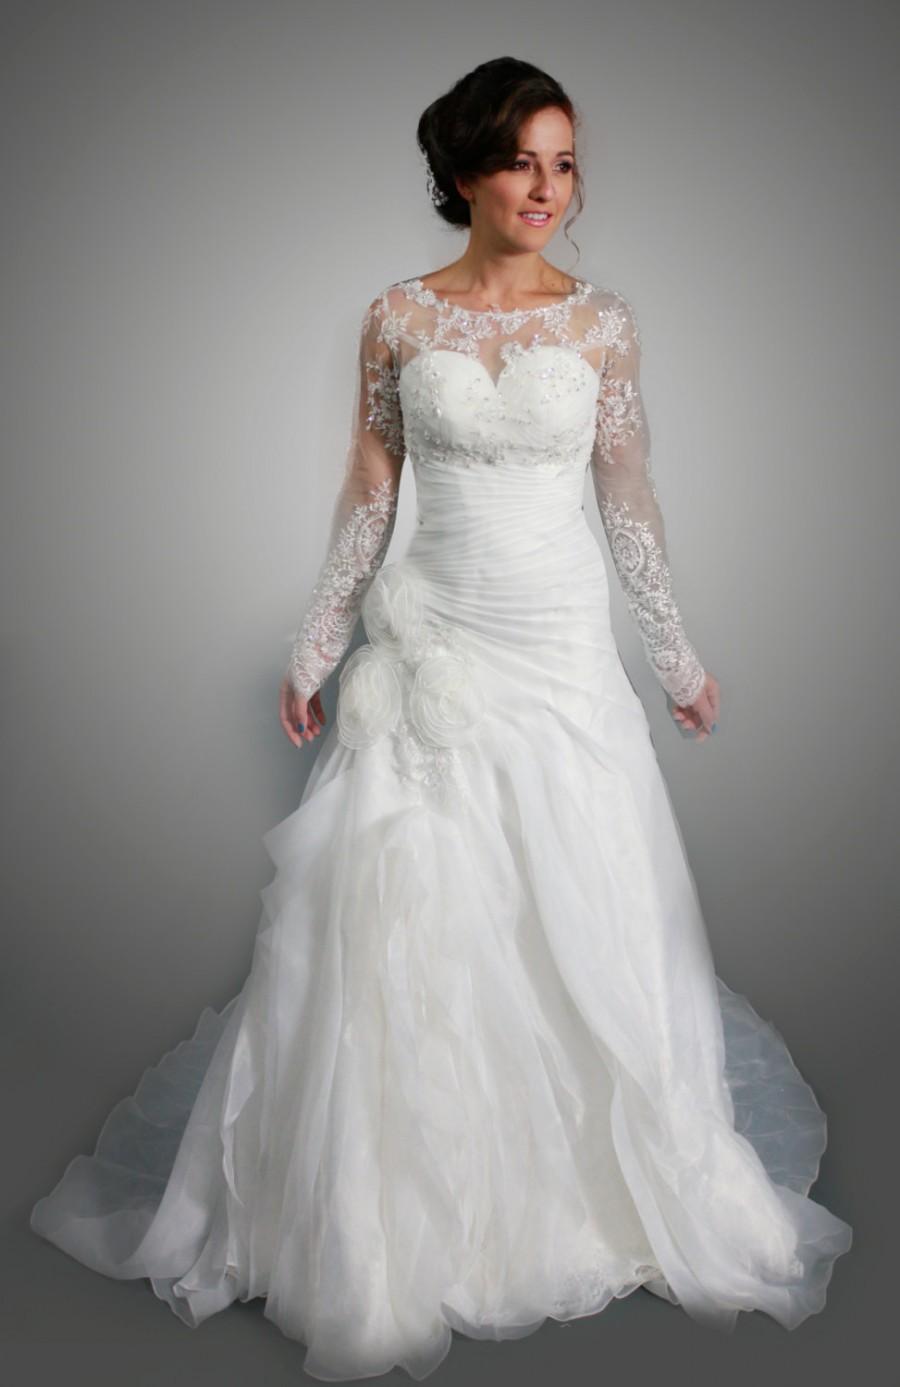 Mariage - Sweetheart organza white wedding dress with long sleeves detachable lace bolero